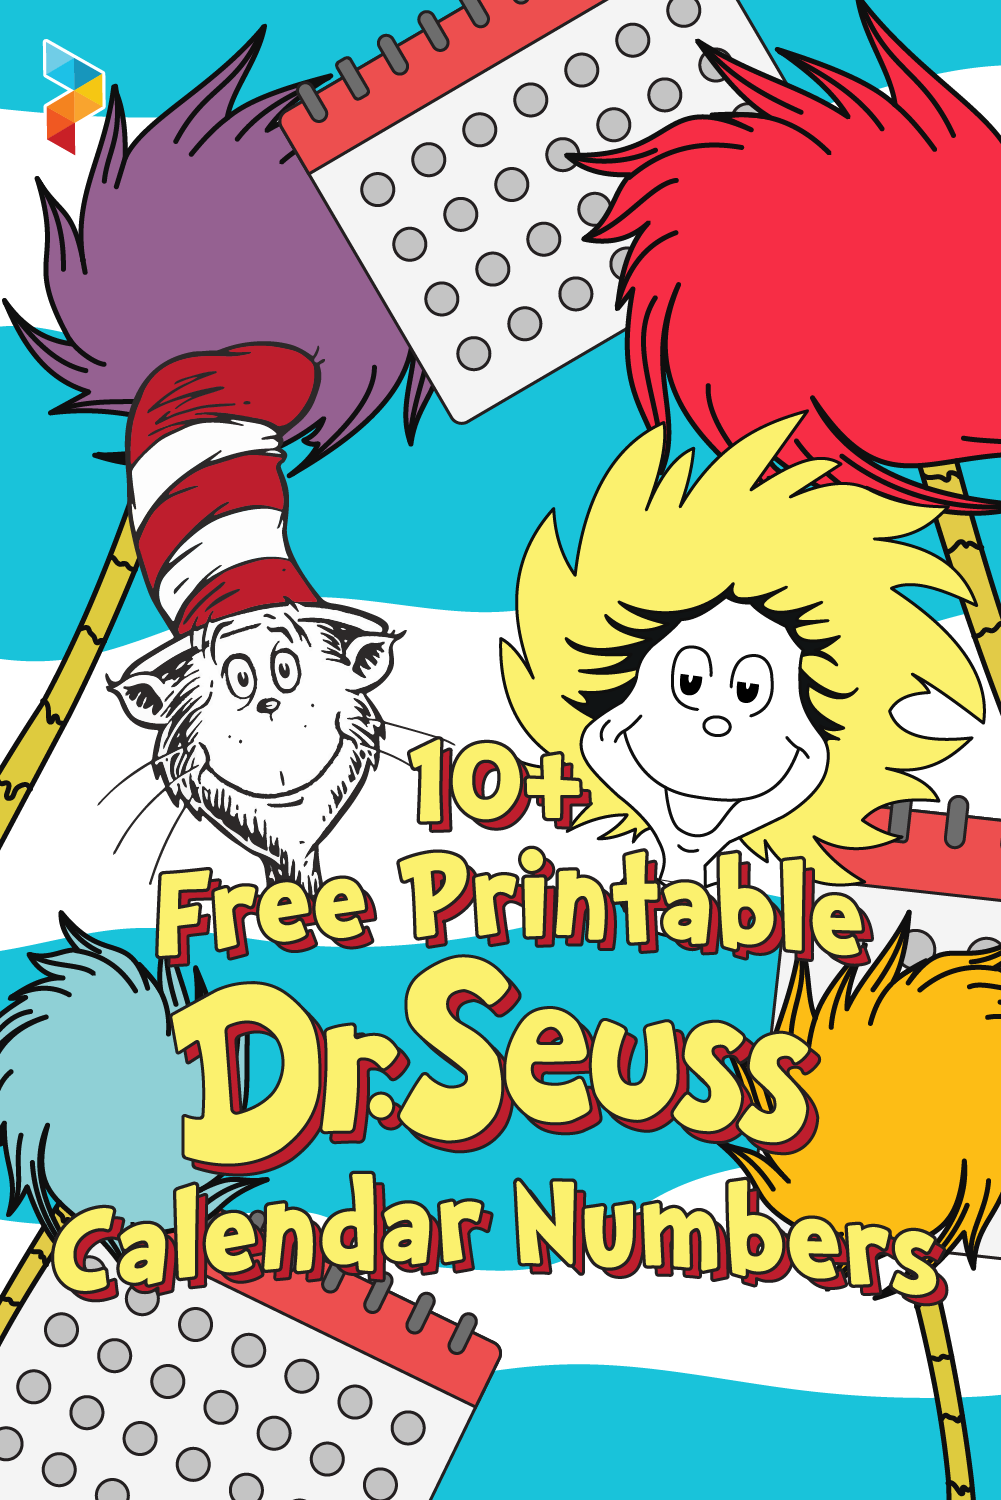 Dr. Seuss Calendar Numbers